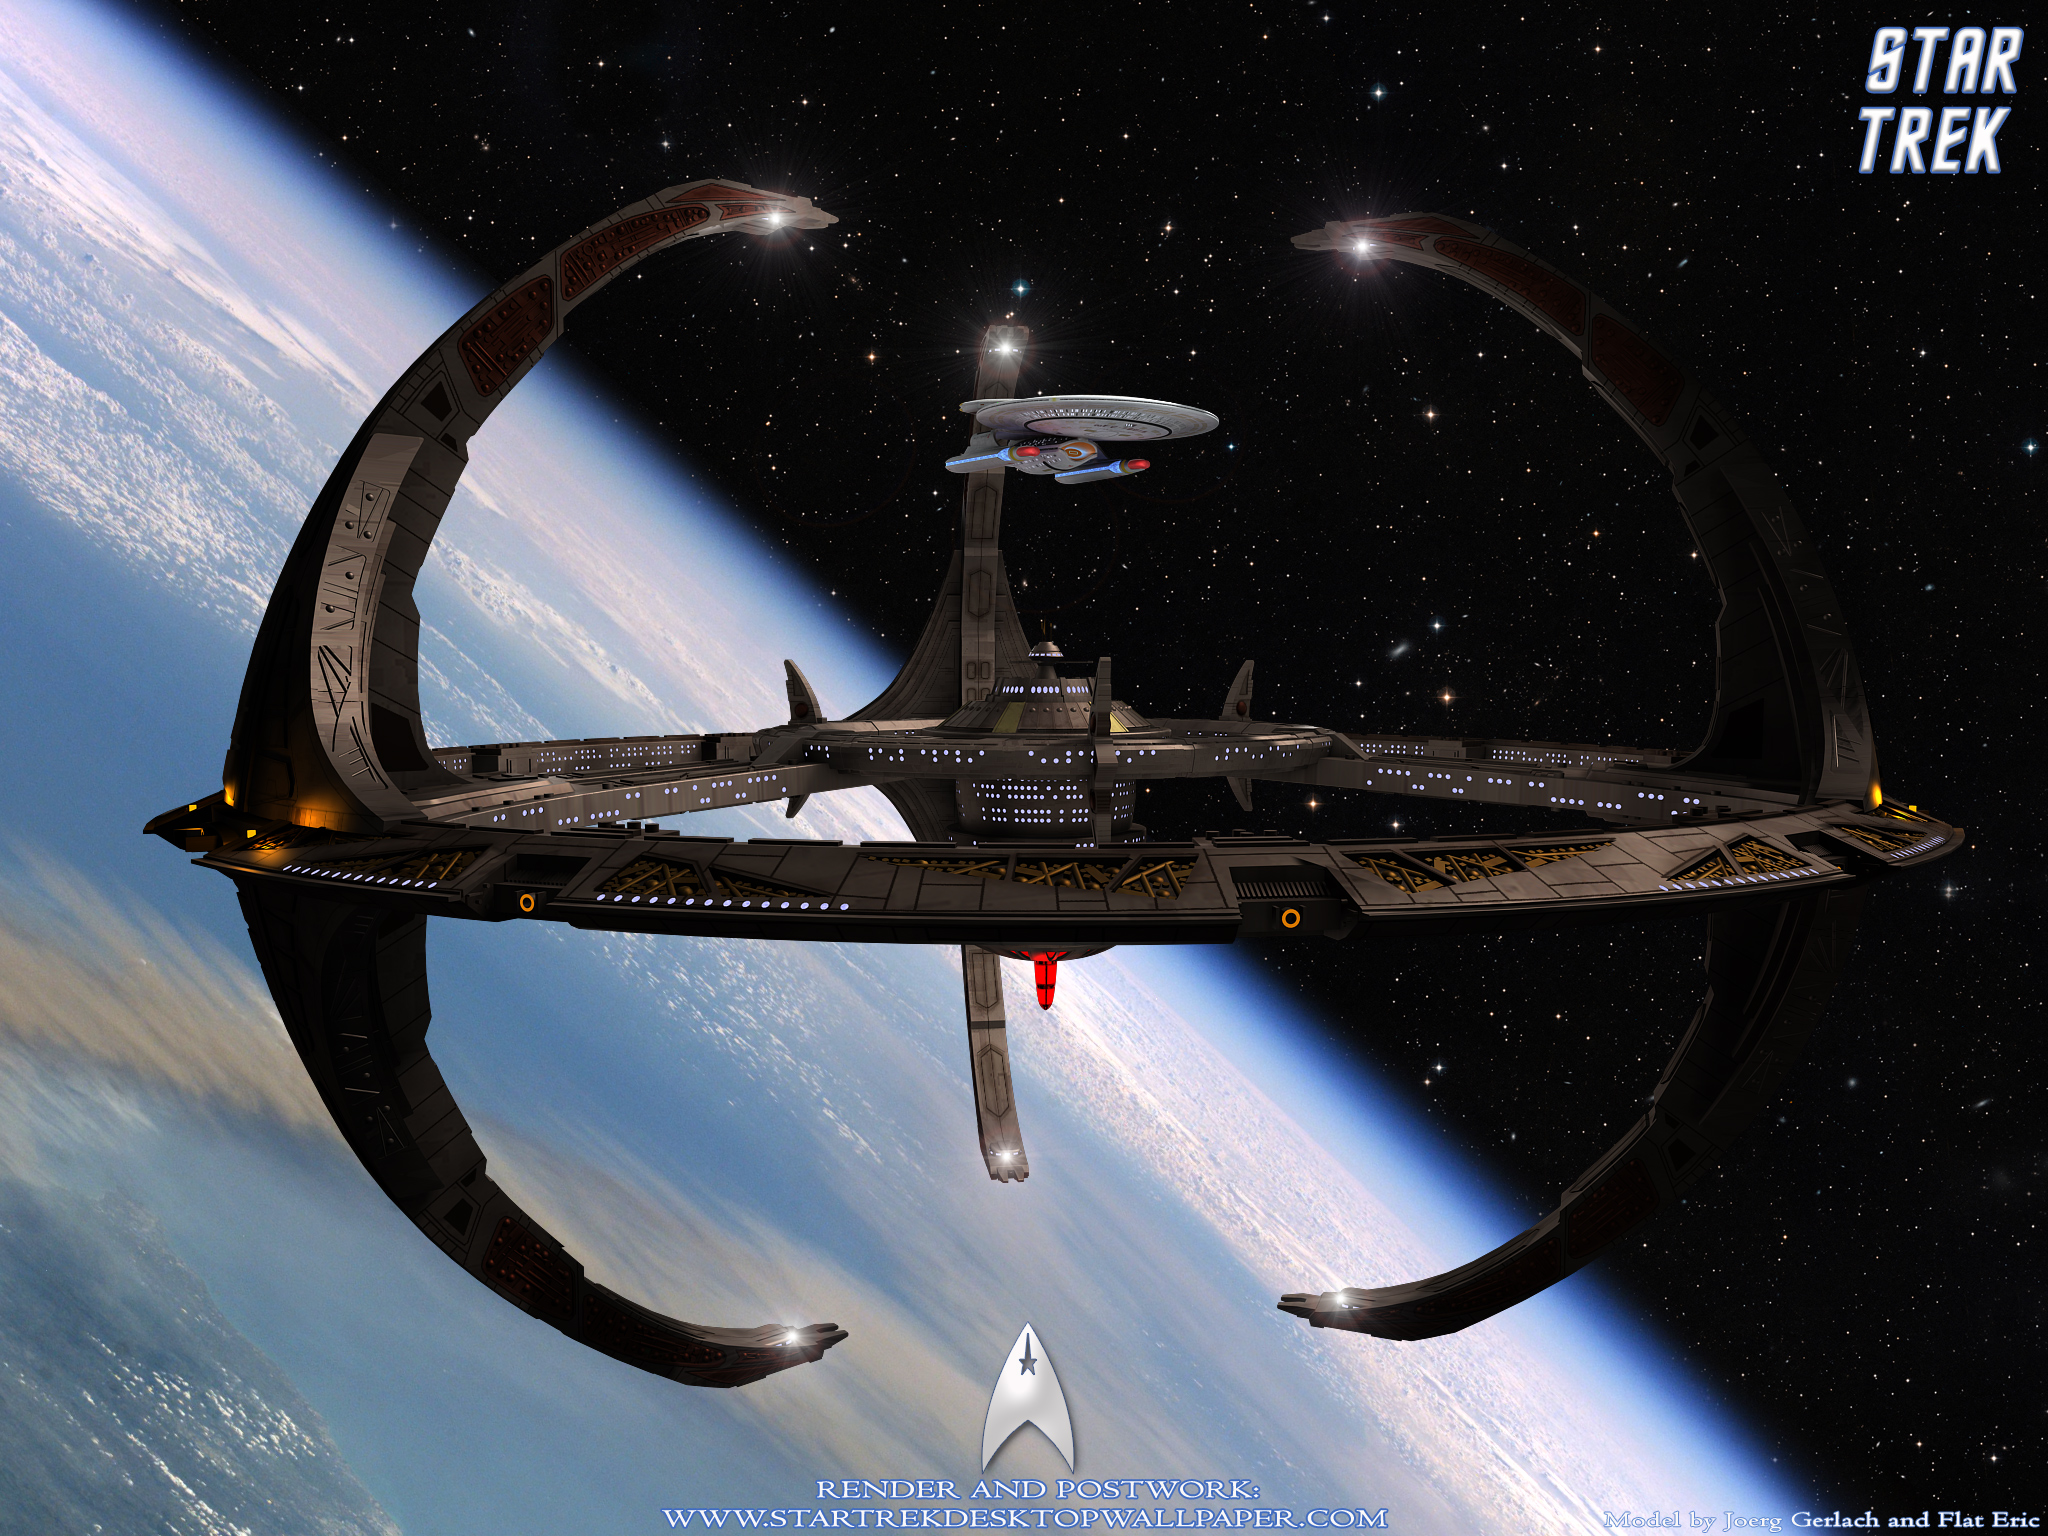 - Star Trek Space Station And Nebula Class Starship - free Star Trek computer desktop wallpaper, pictures, images.